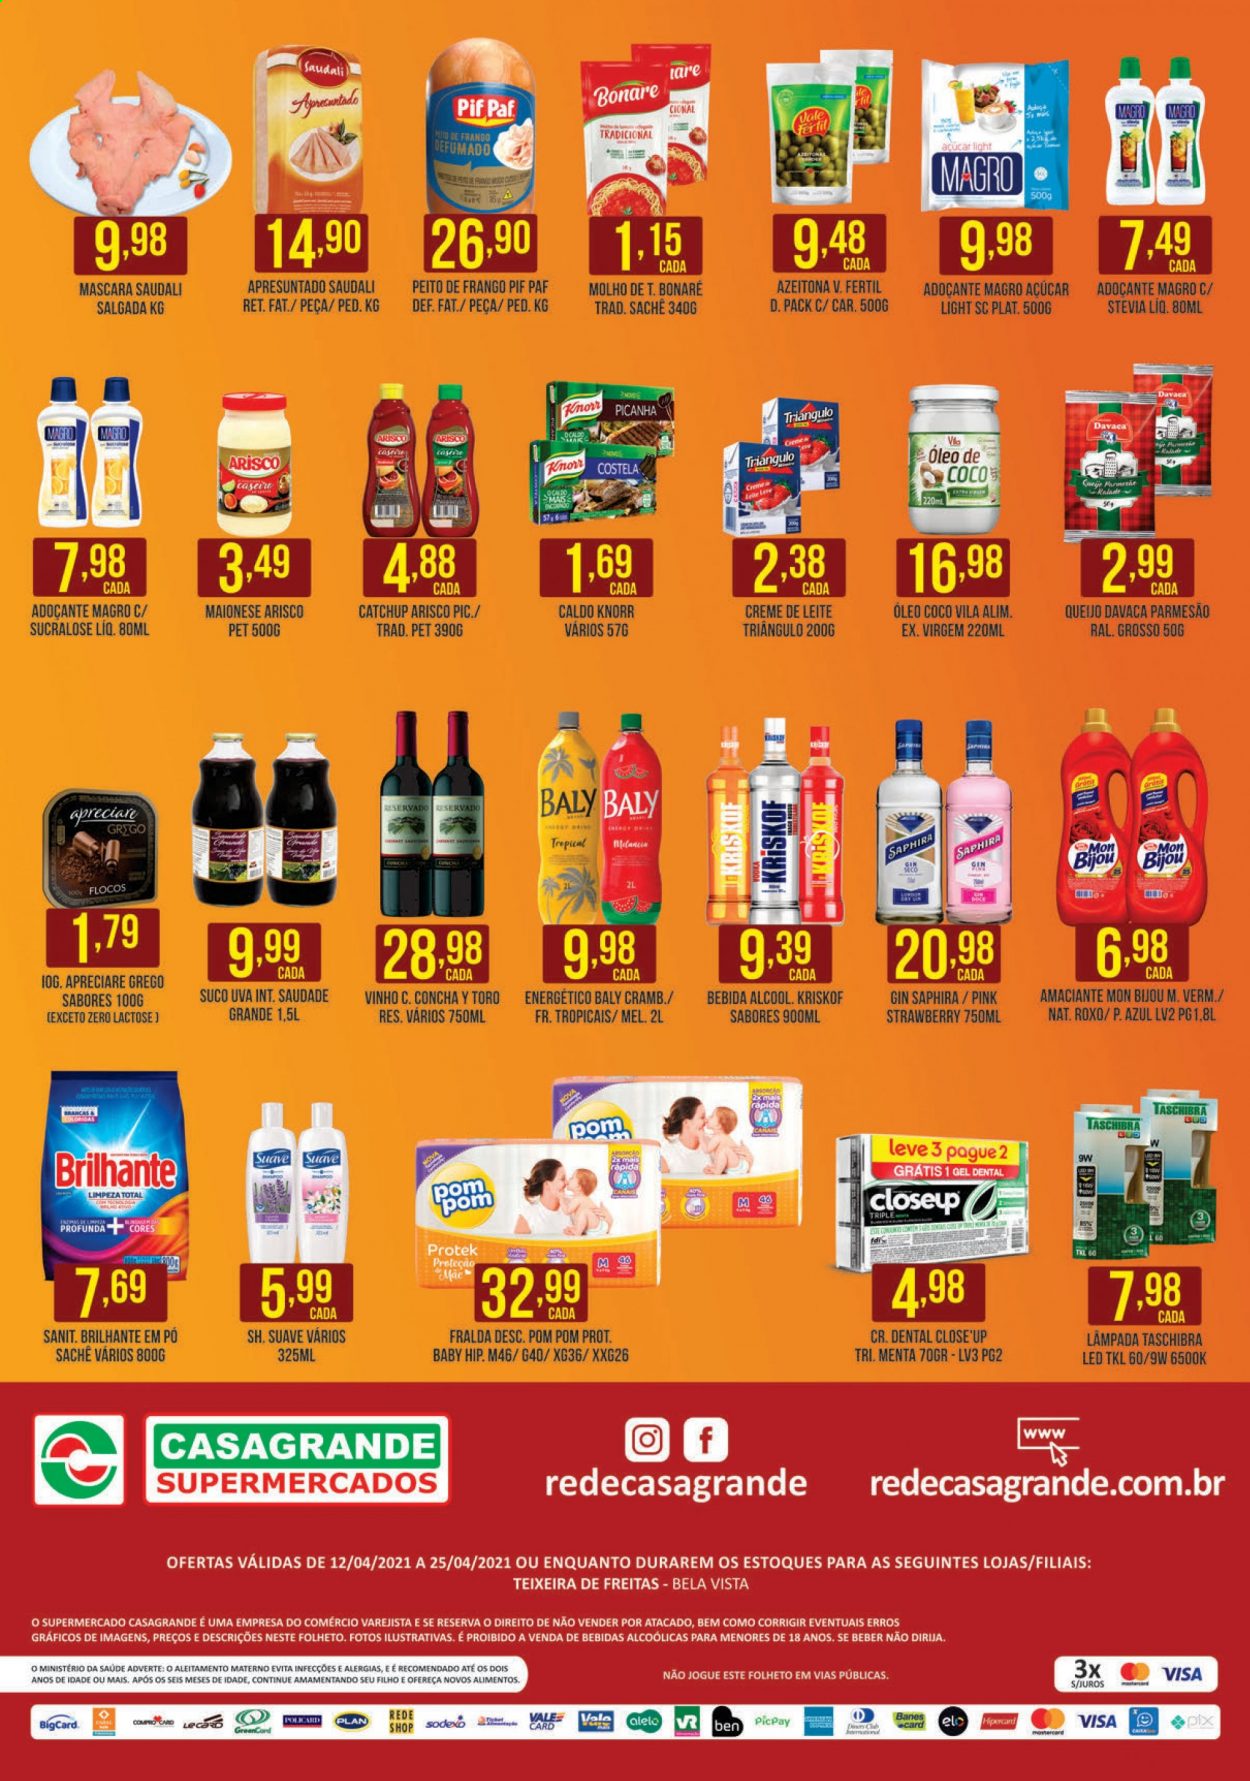 Encarte Casagrande Supermercados  - 12.04.2021 - 25.04.2021.